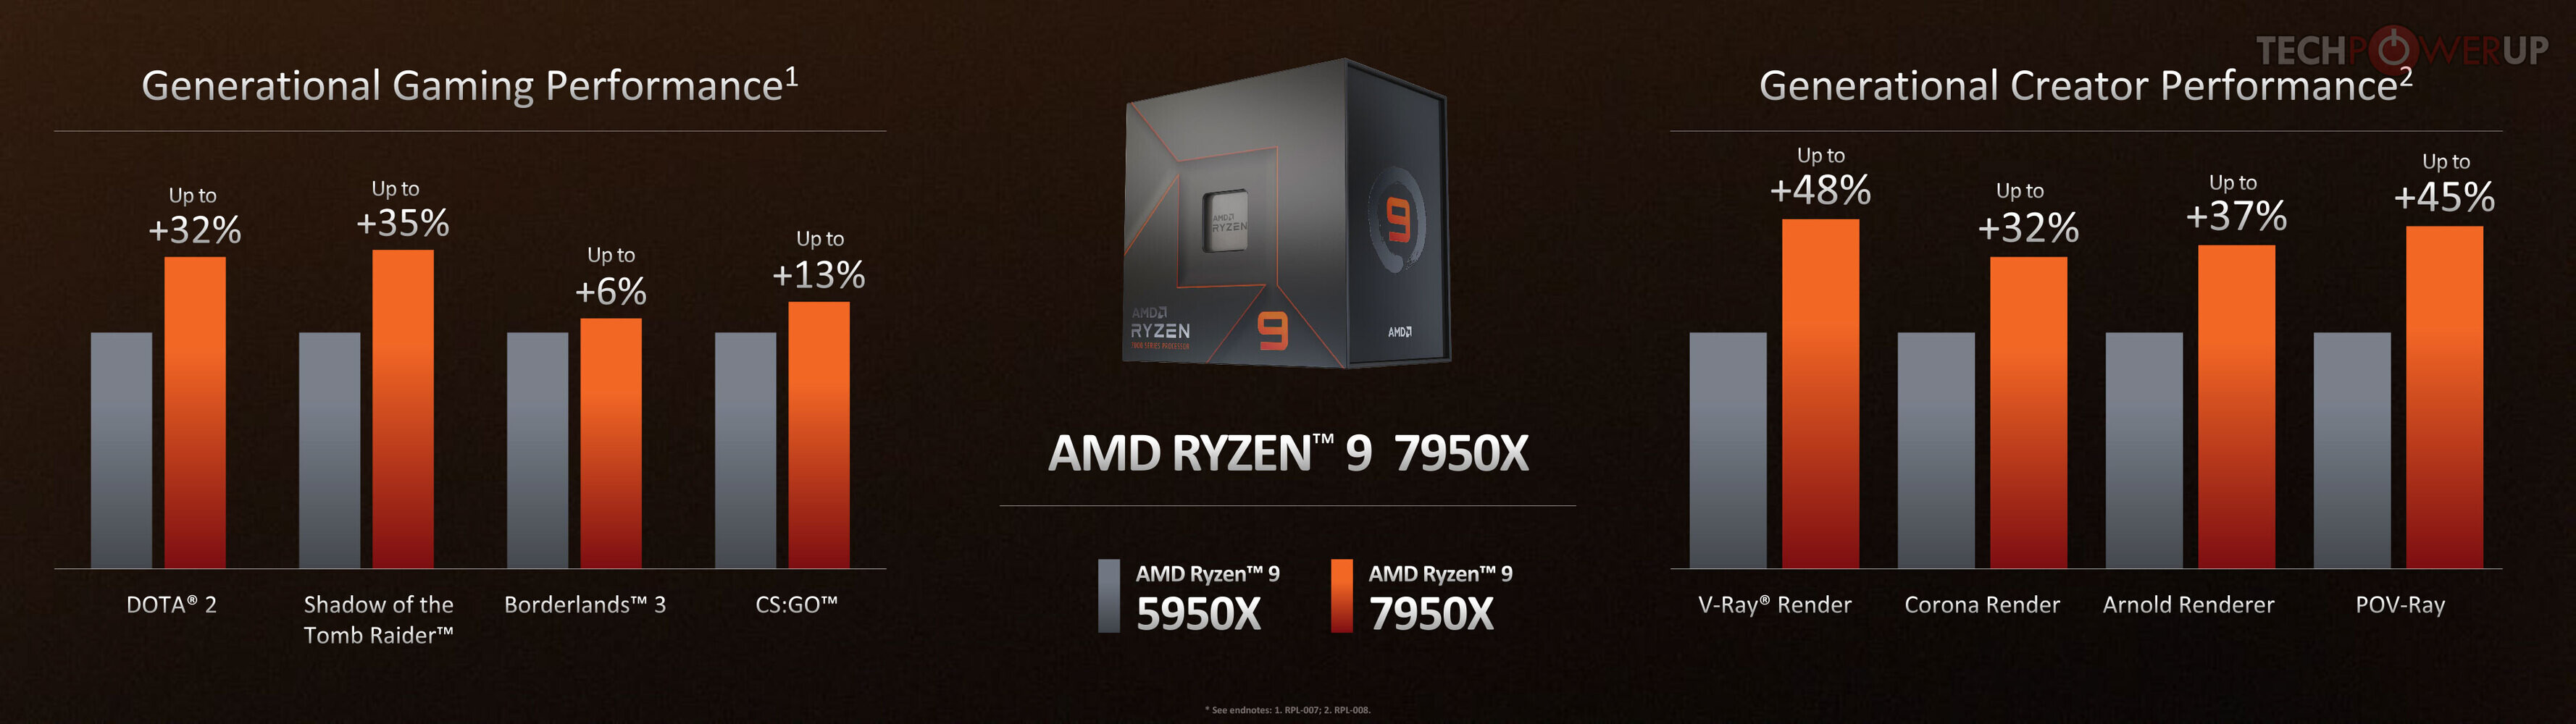 AMD seemingly confirms Ryzen 7000 launch line-up